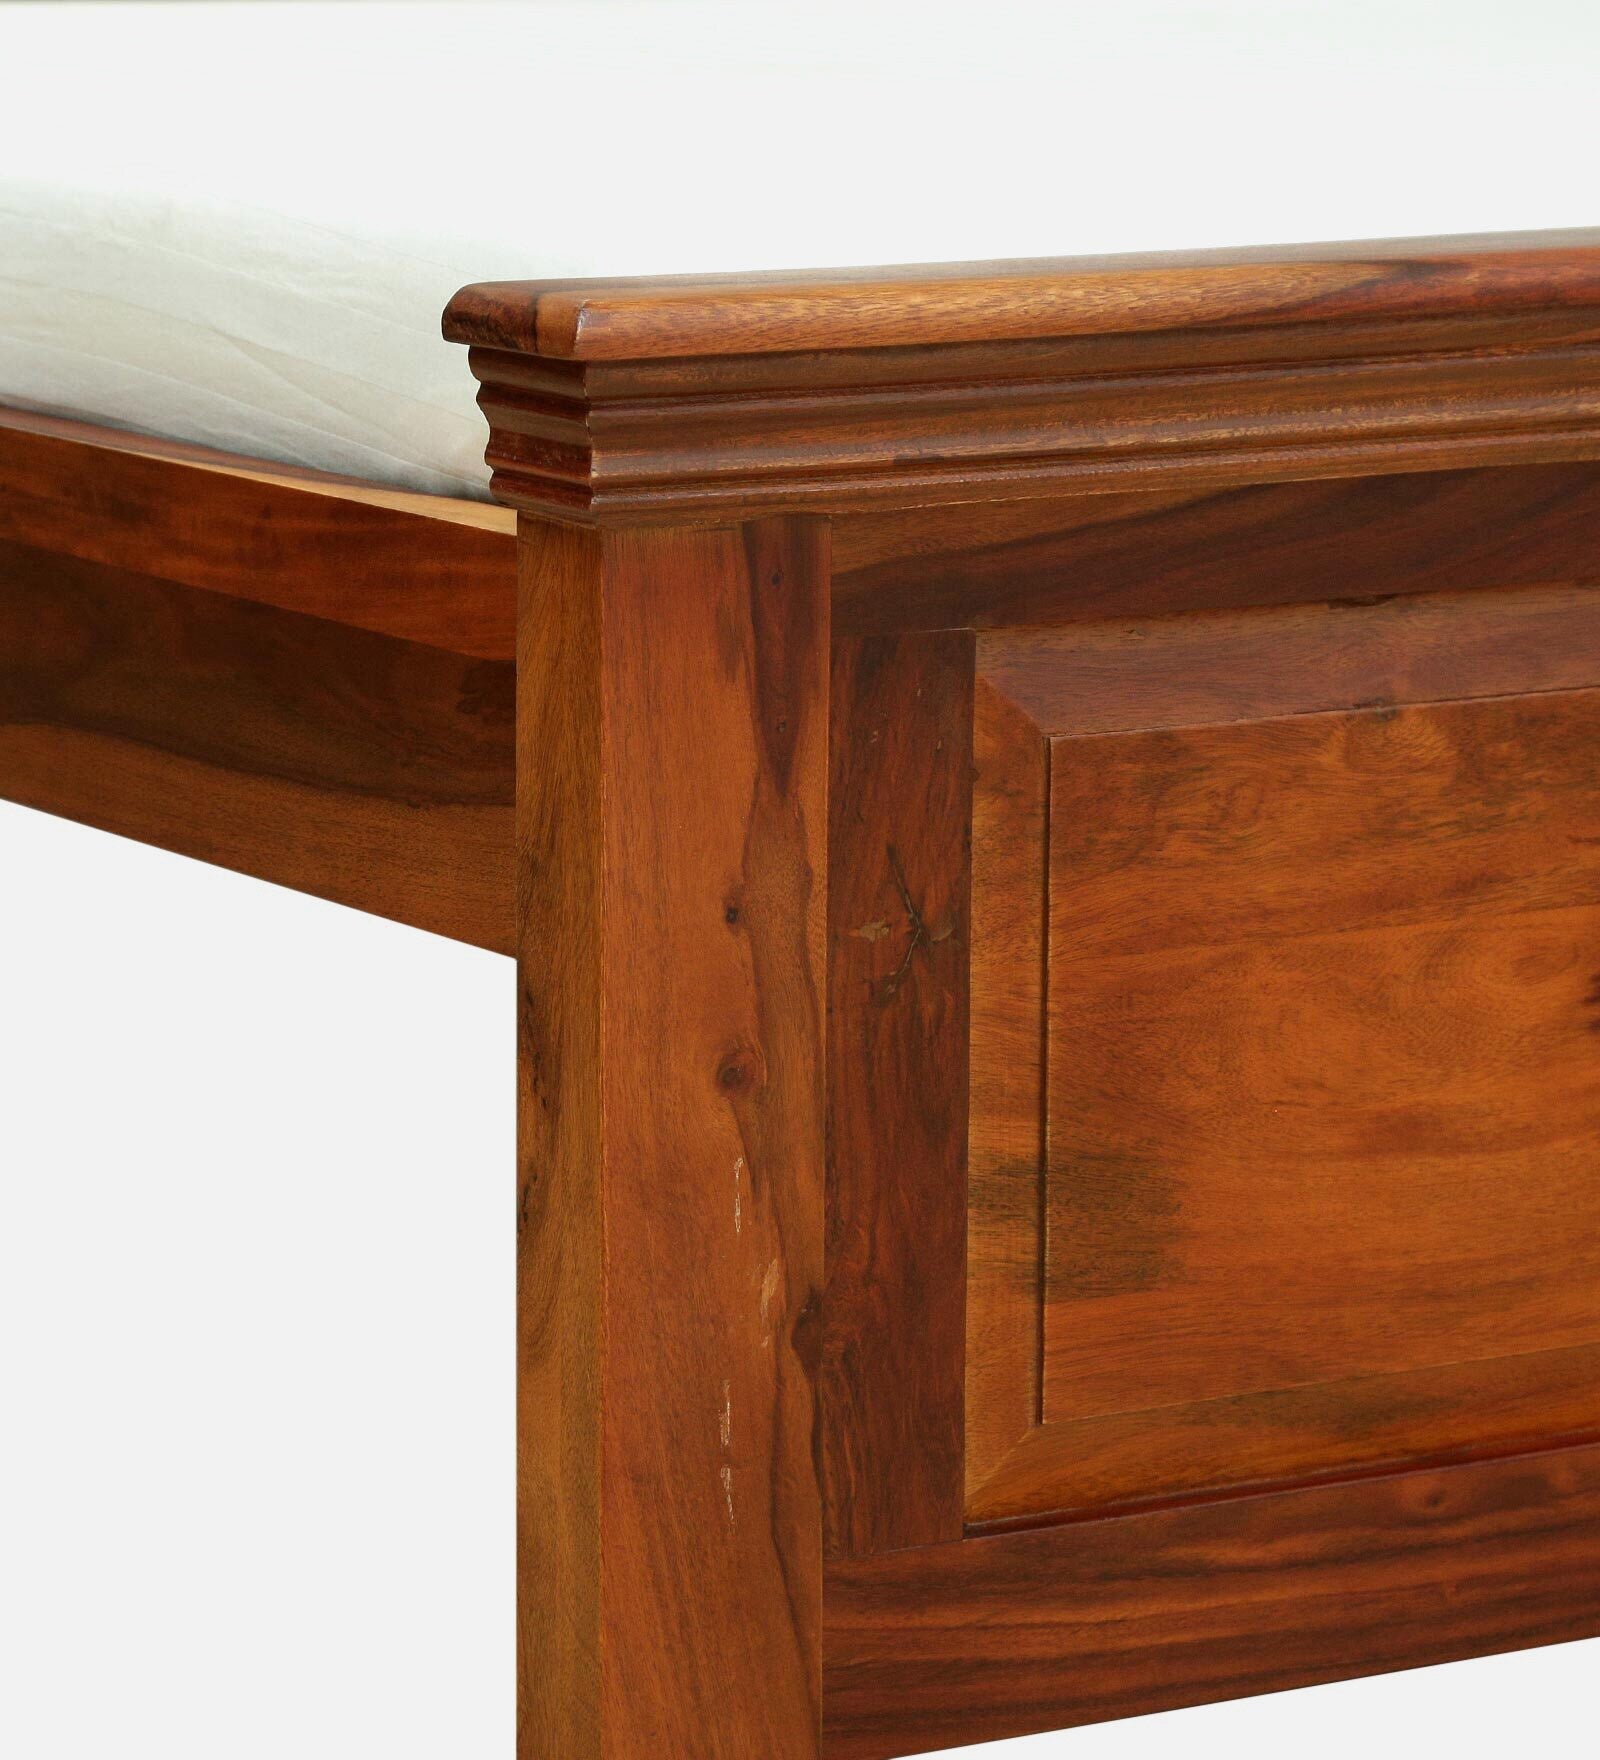 Vandena Solid Wood Queen Size Bed In Honey Oak Finish By Rajwada - Rajwada Furnish